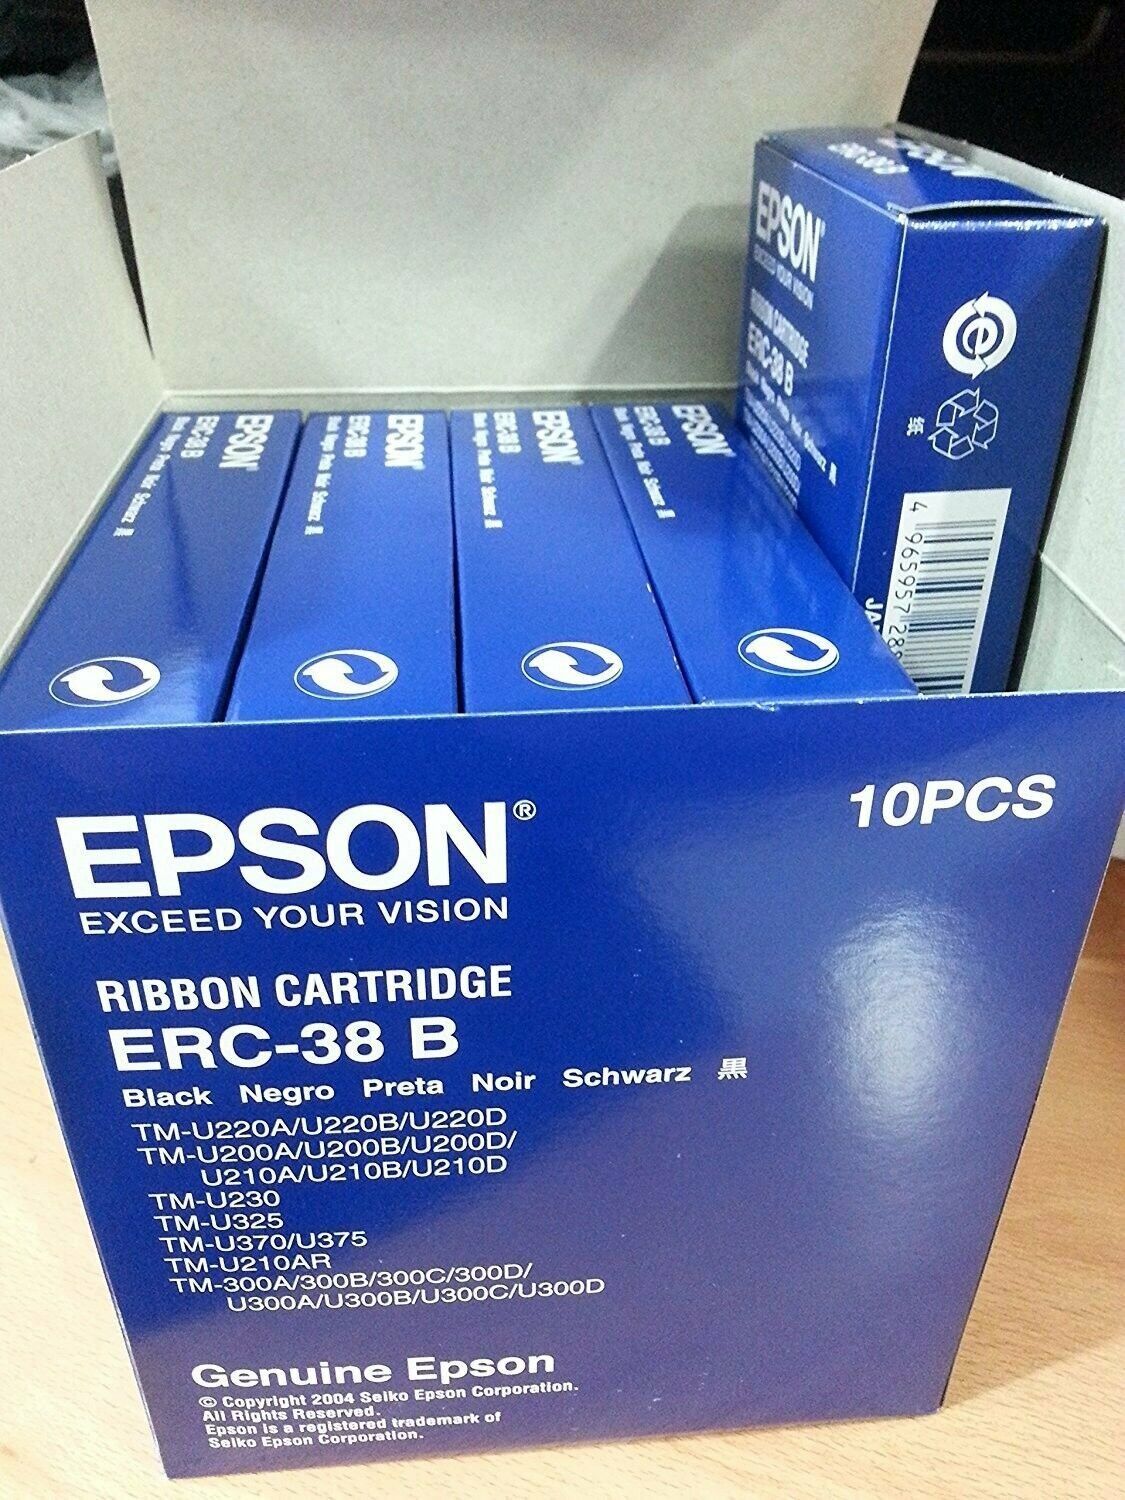 10 Genuine Epson ERC-38B Black Printer Ribbon Cartridges